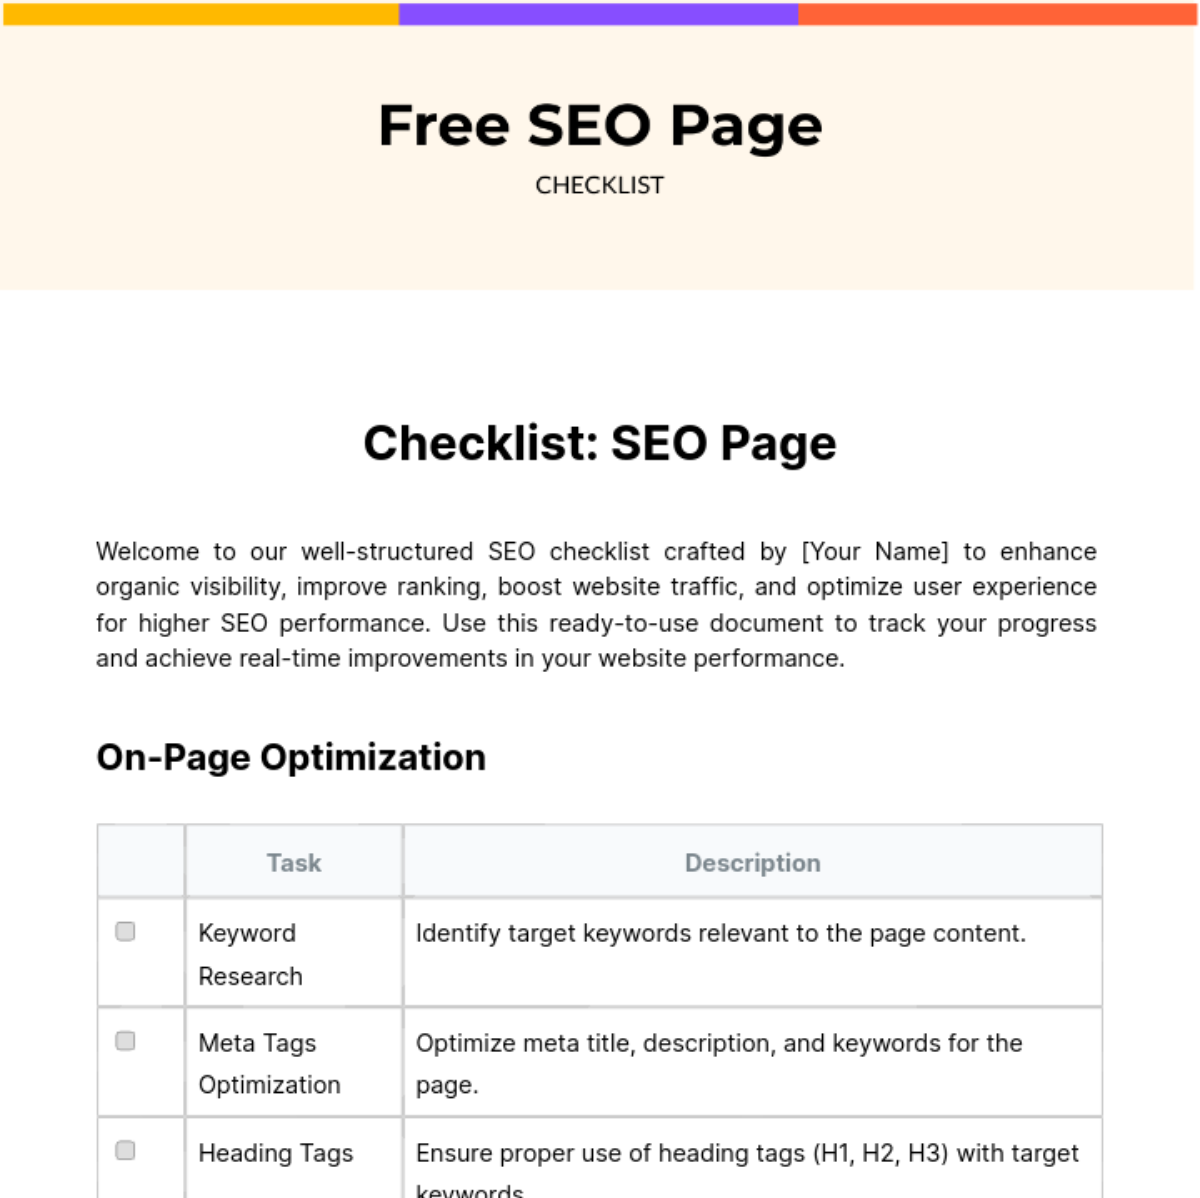 Free SEO Page Checklist Template